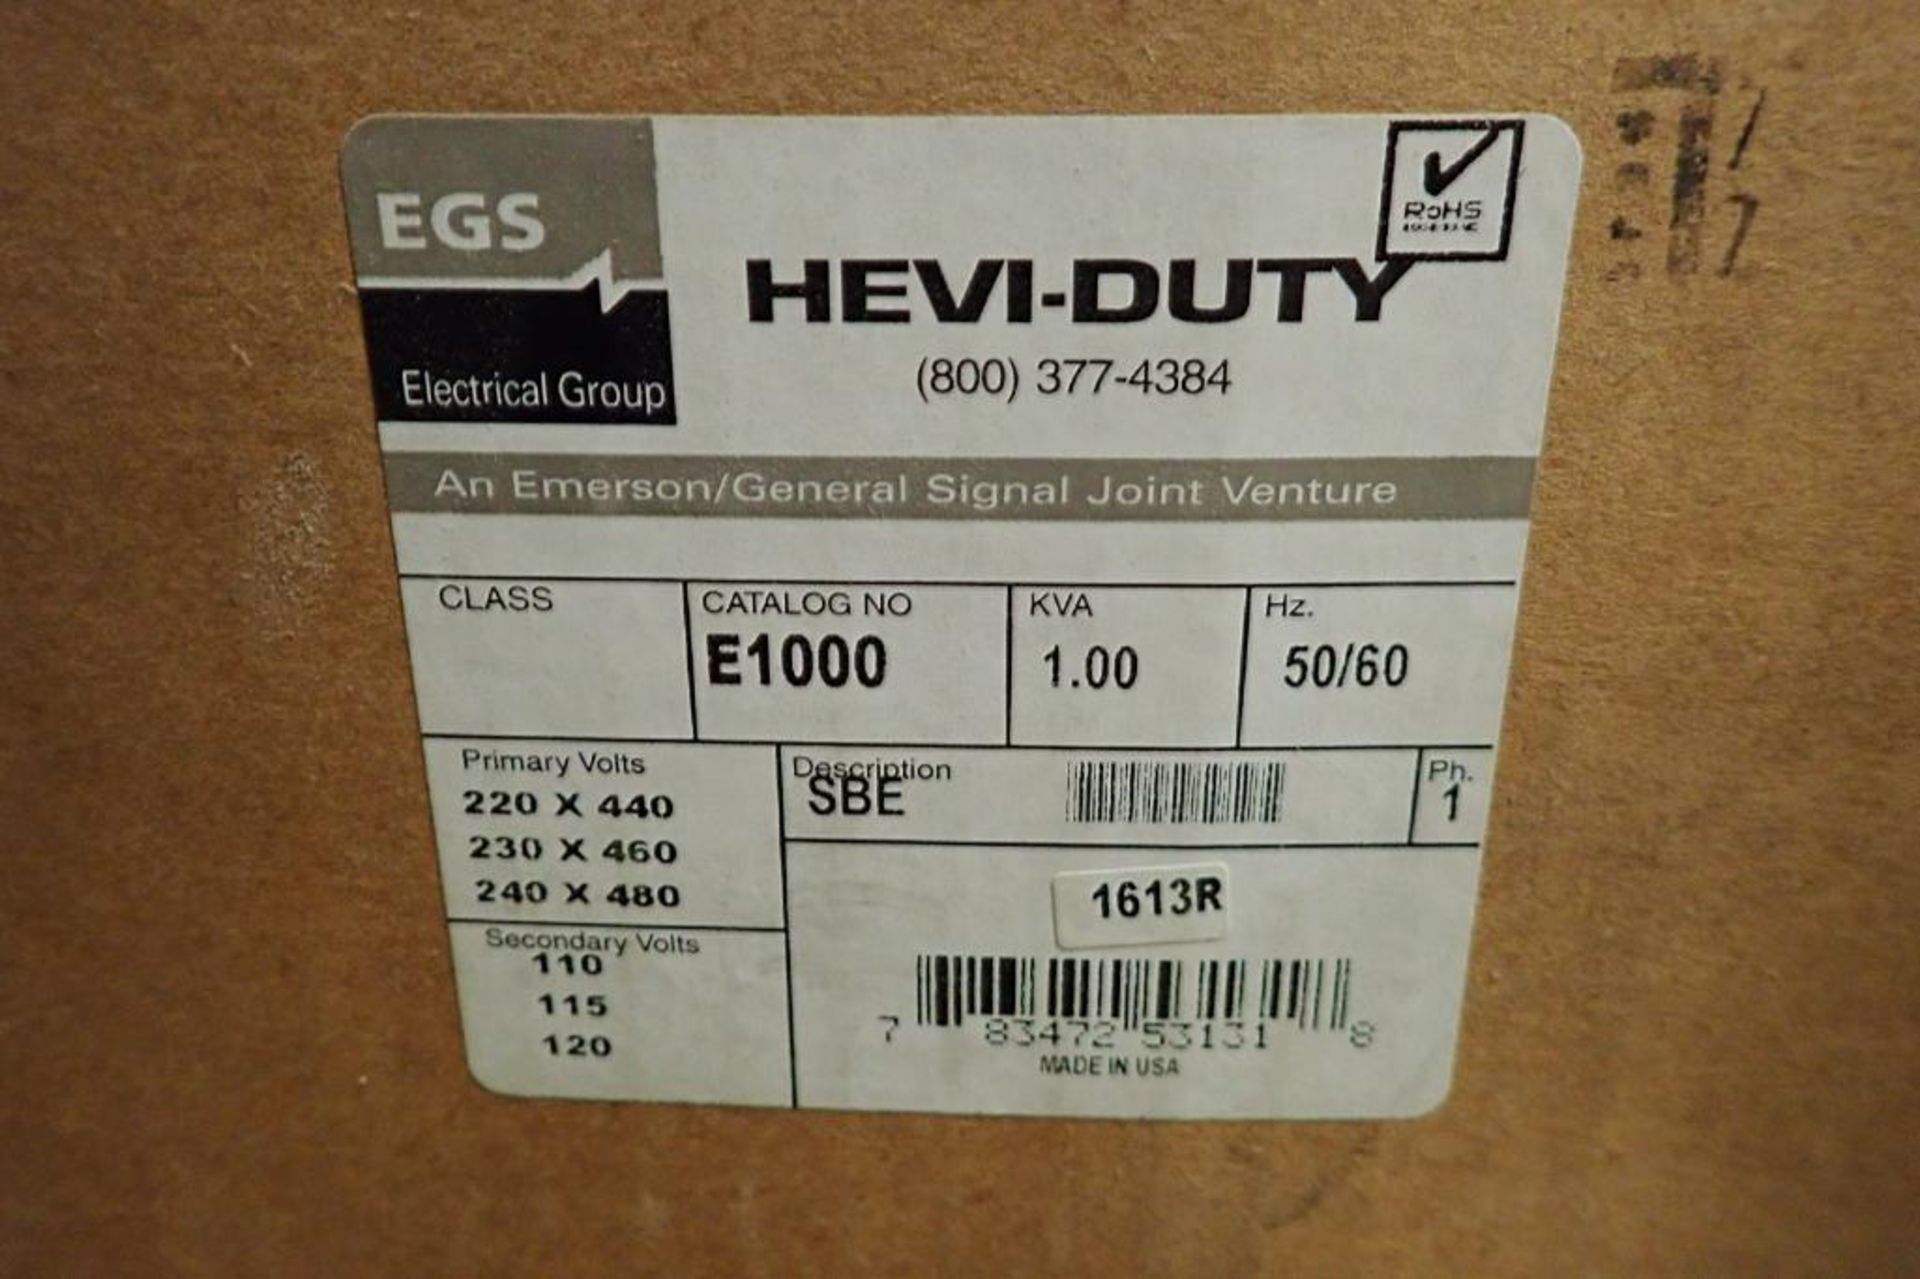 Unused EGS heavy duty industrial control transformer, primary voltage 220x460 / 230x460 / 240x480, s - Image 5 of 6